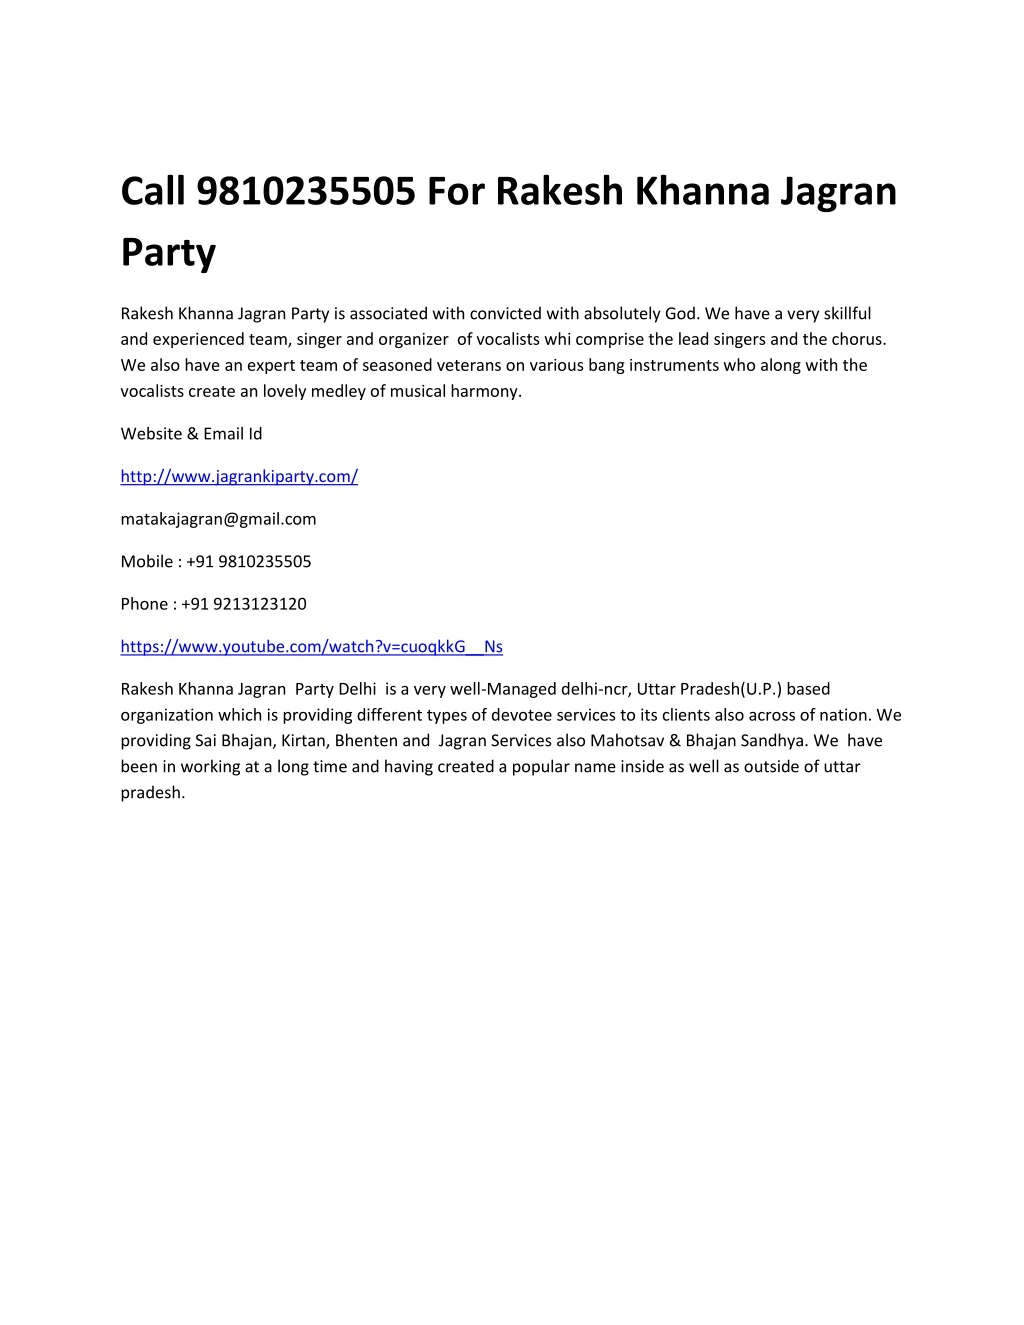 call 9810235505 for rakesh khanna jagran party